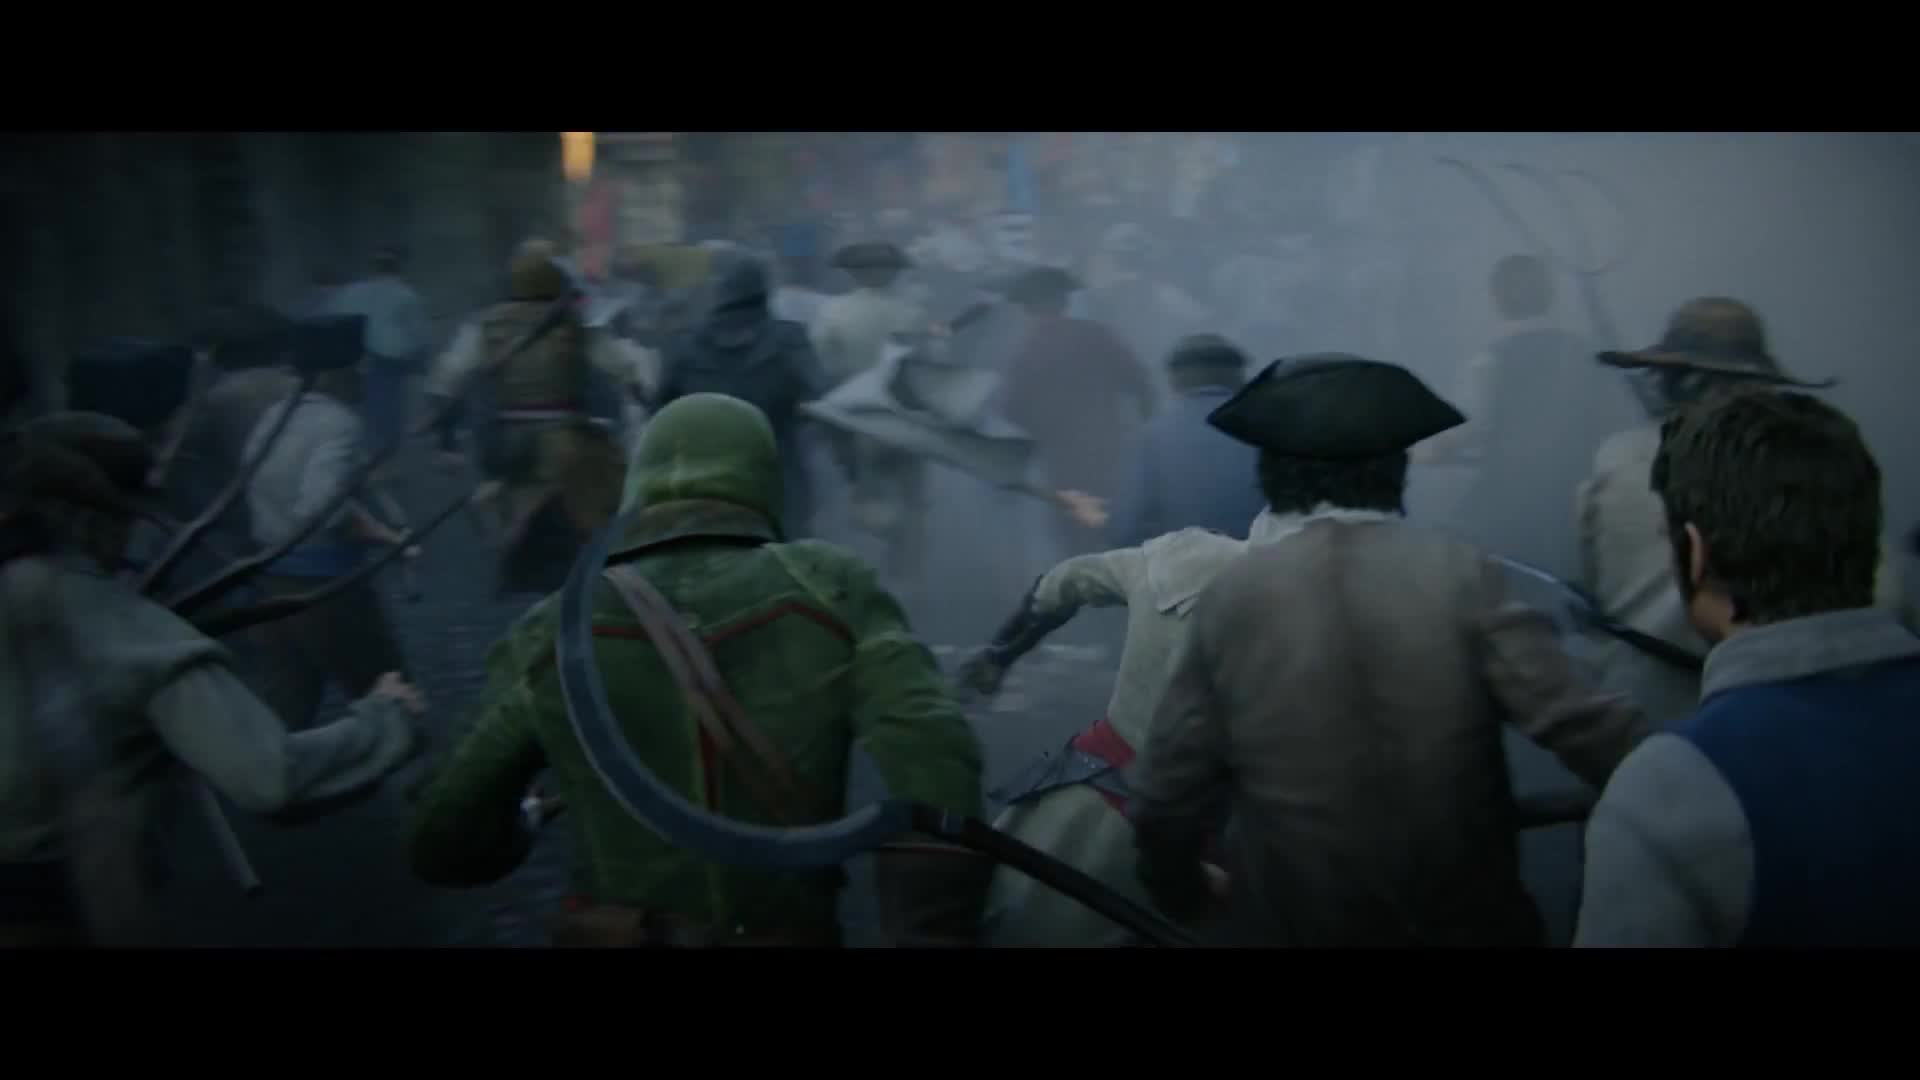 Assassin's Creed - Trailer World Premiere 